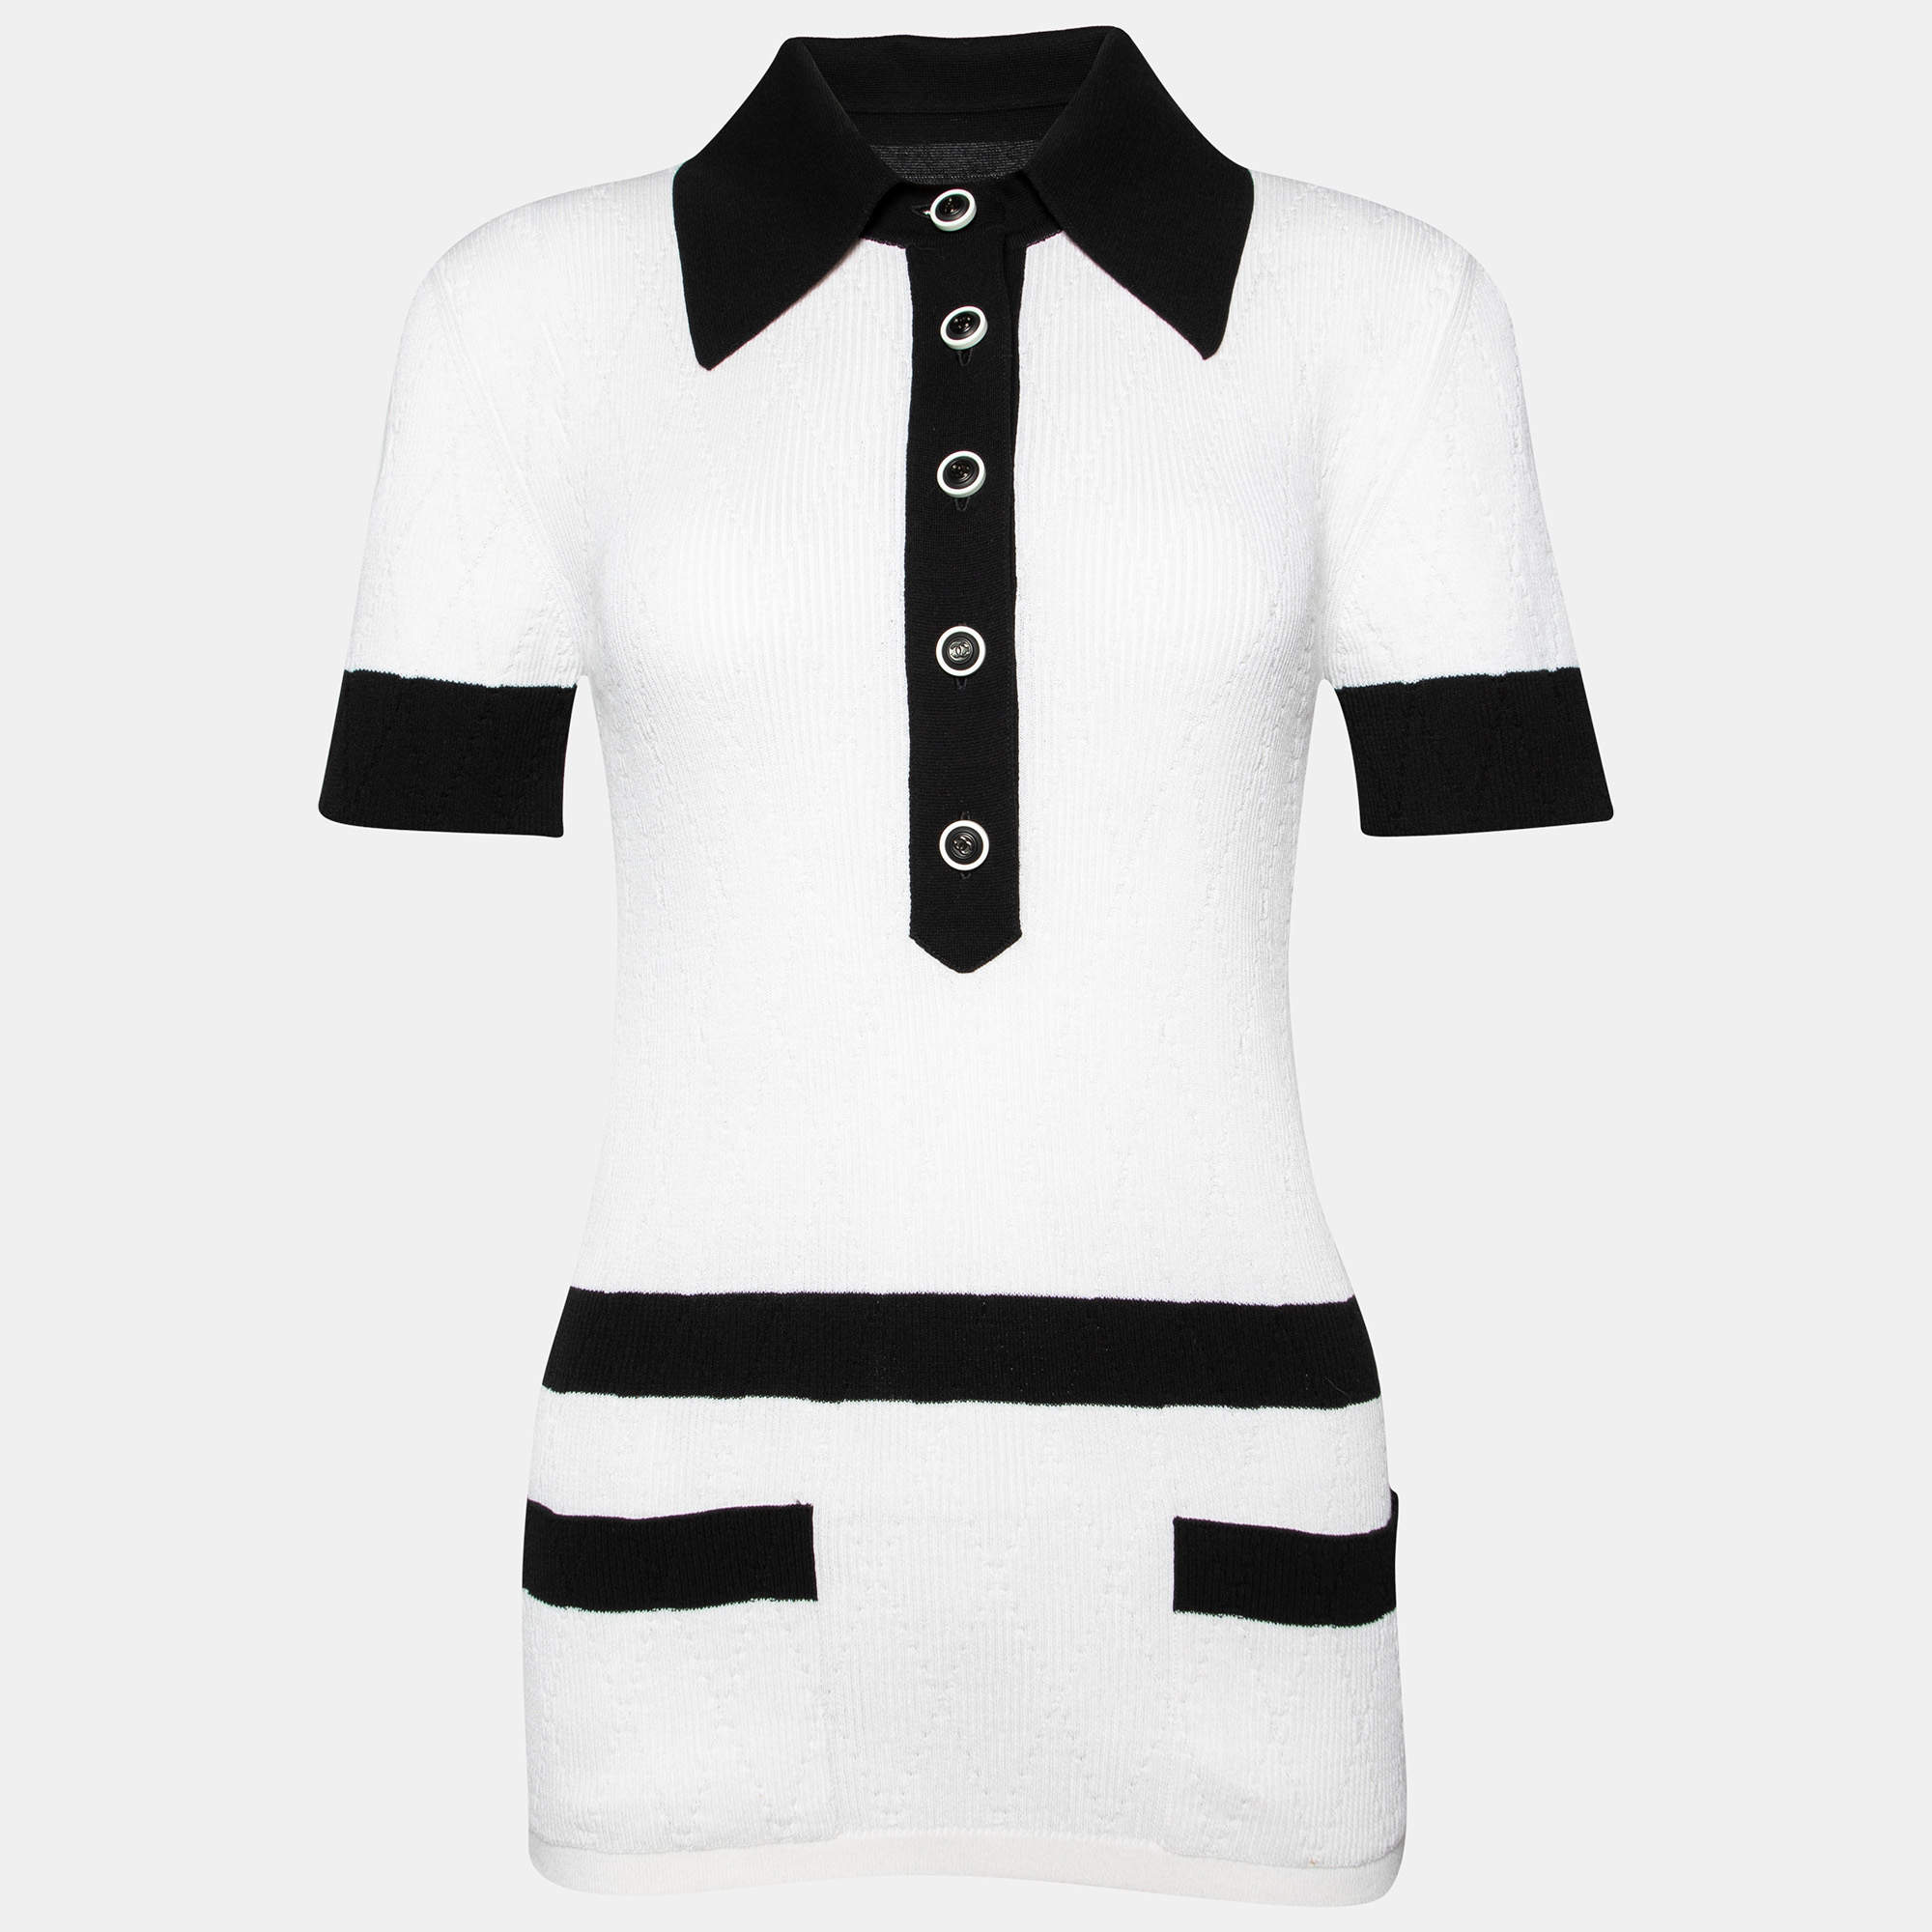 Chanel Polo Shirts